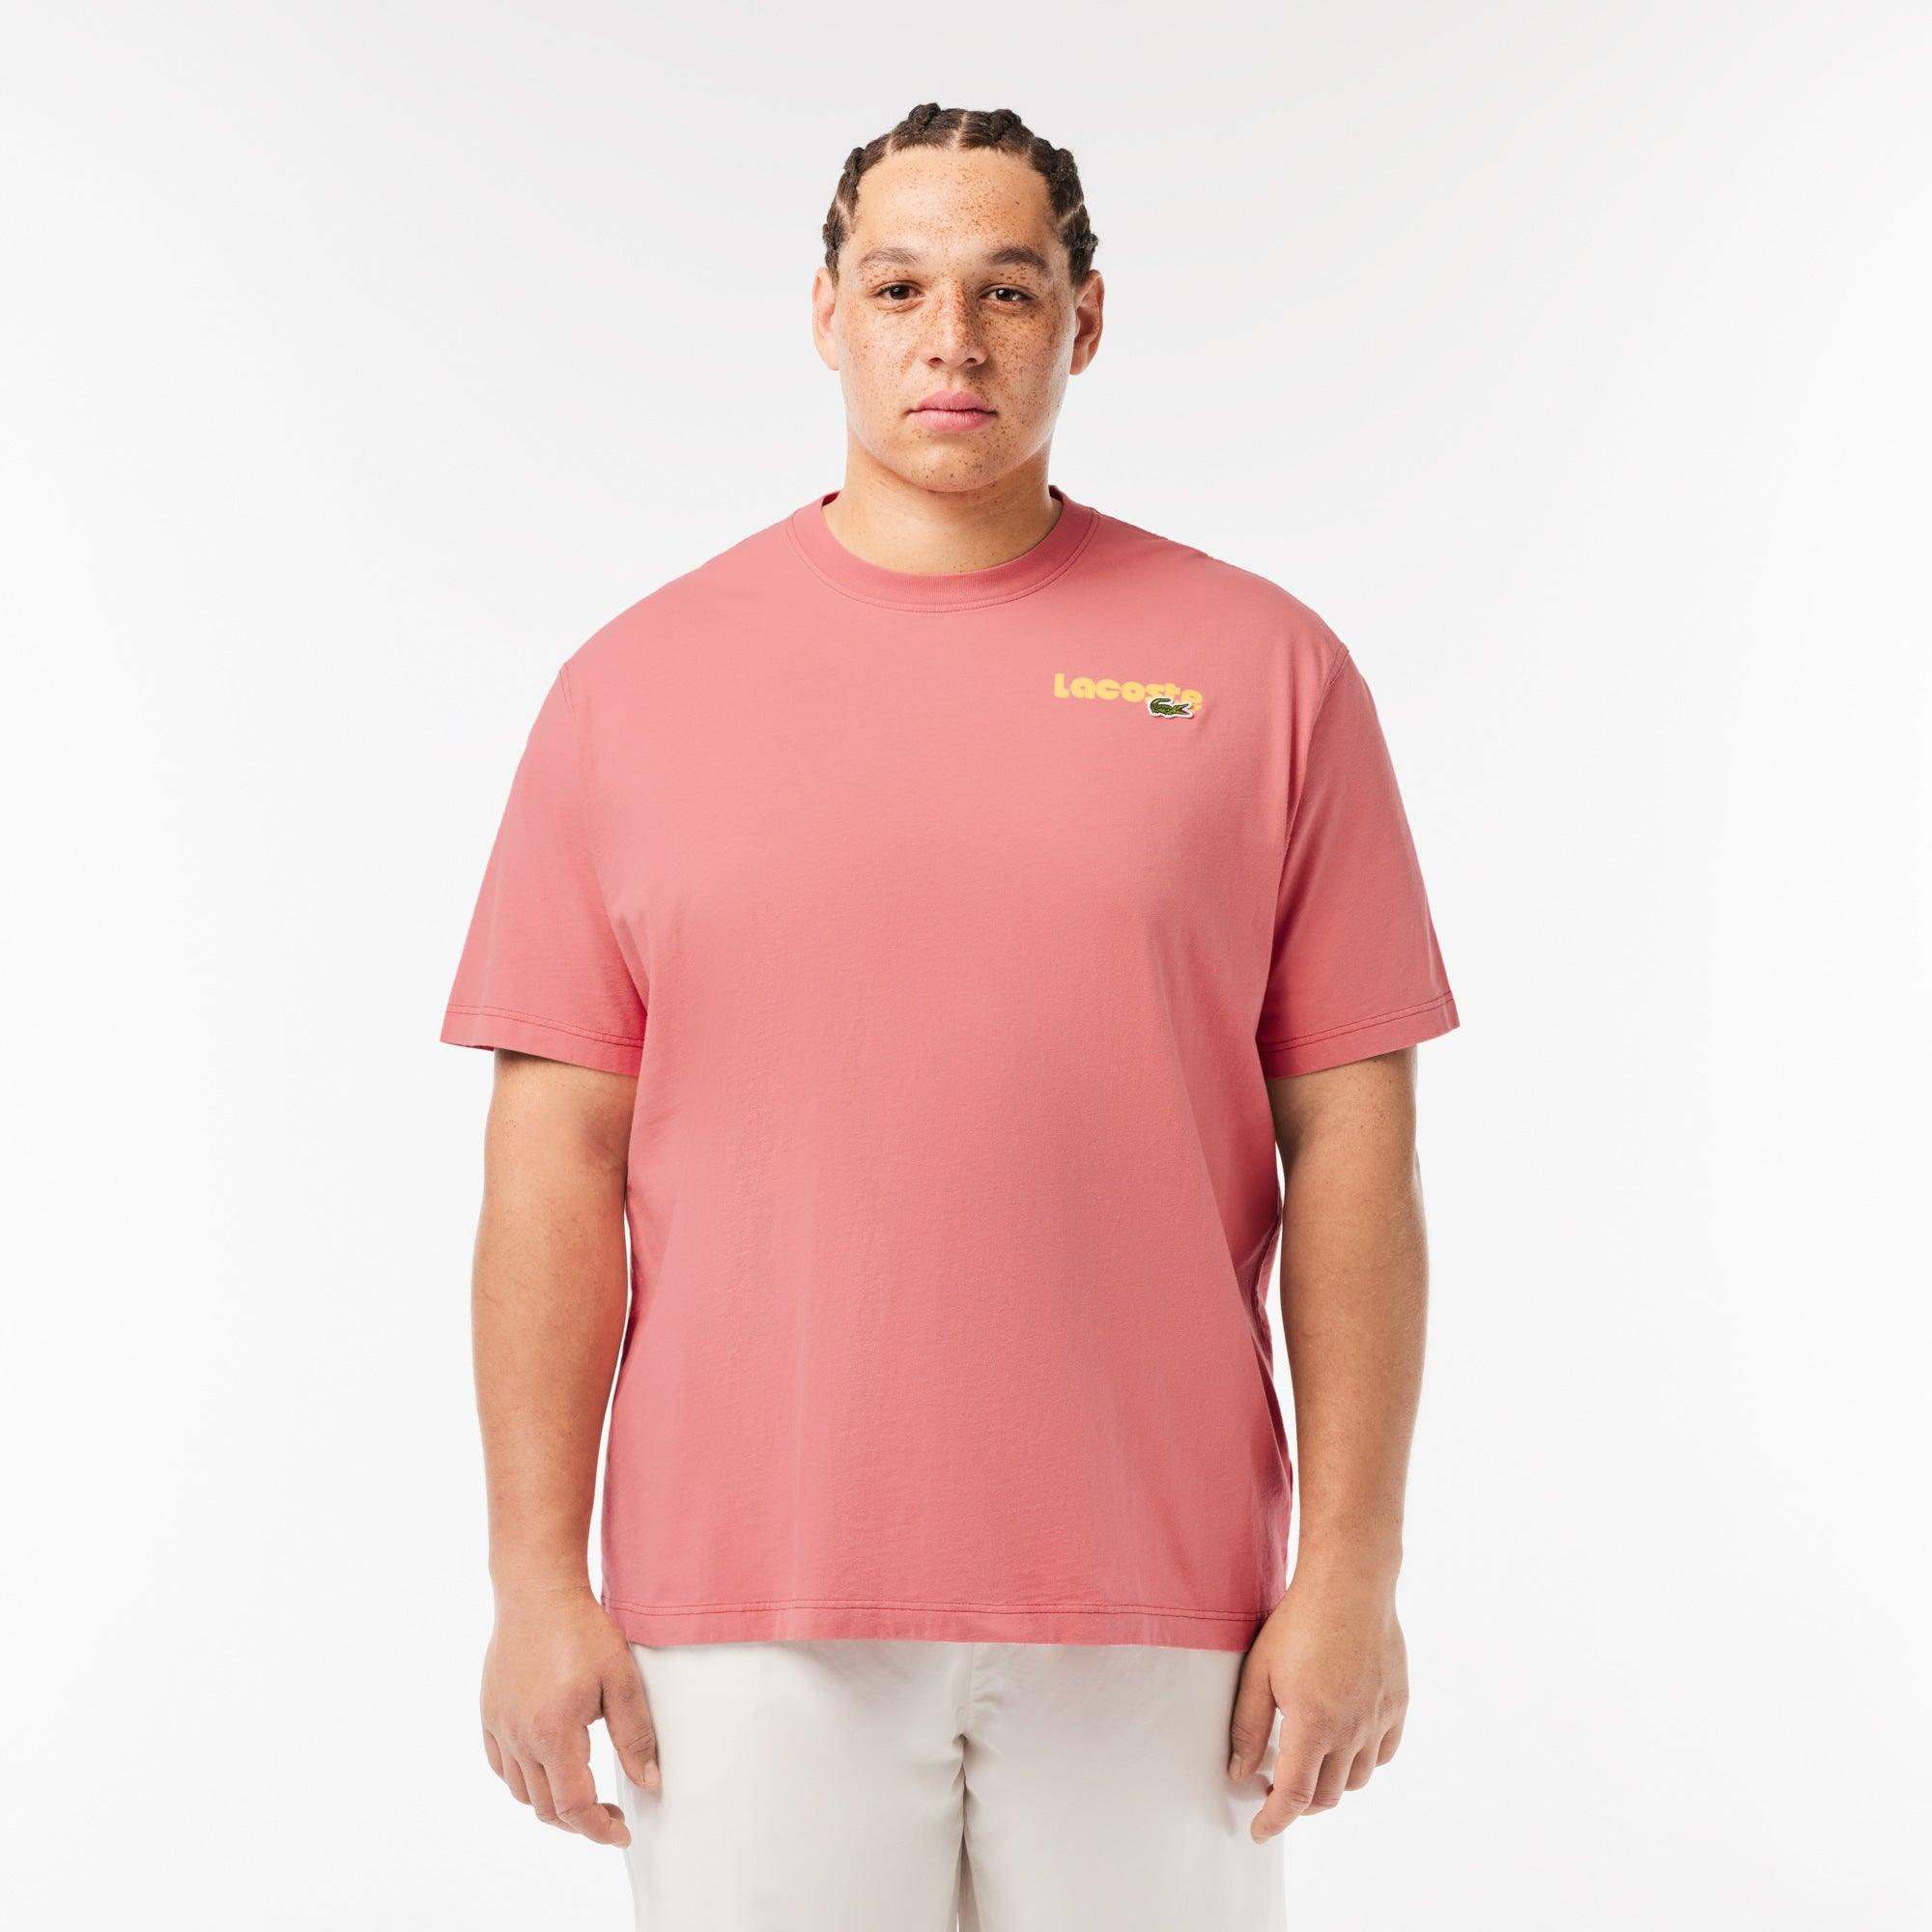 Camiseta LACOSTE Efecto Lavado Degradé Rosa - ECRU